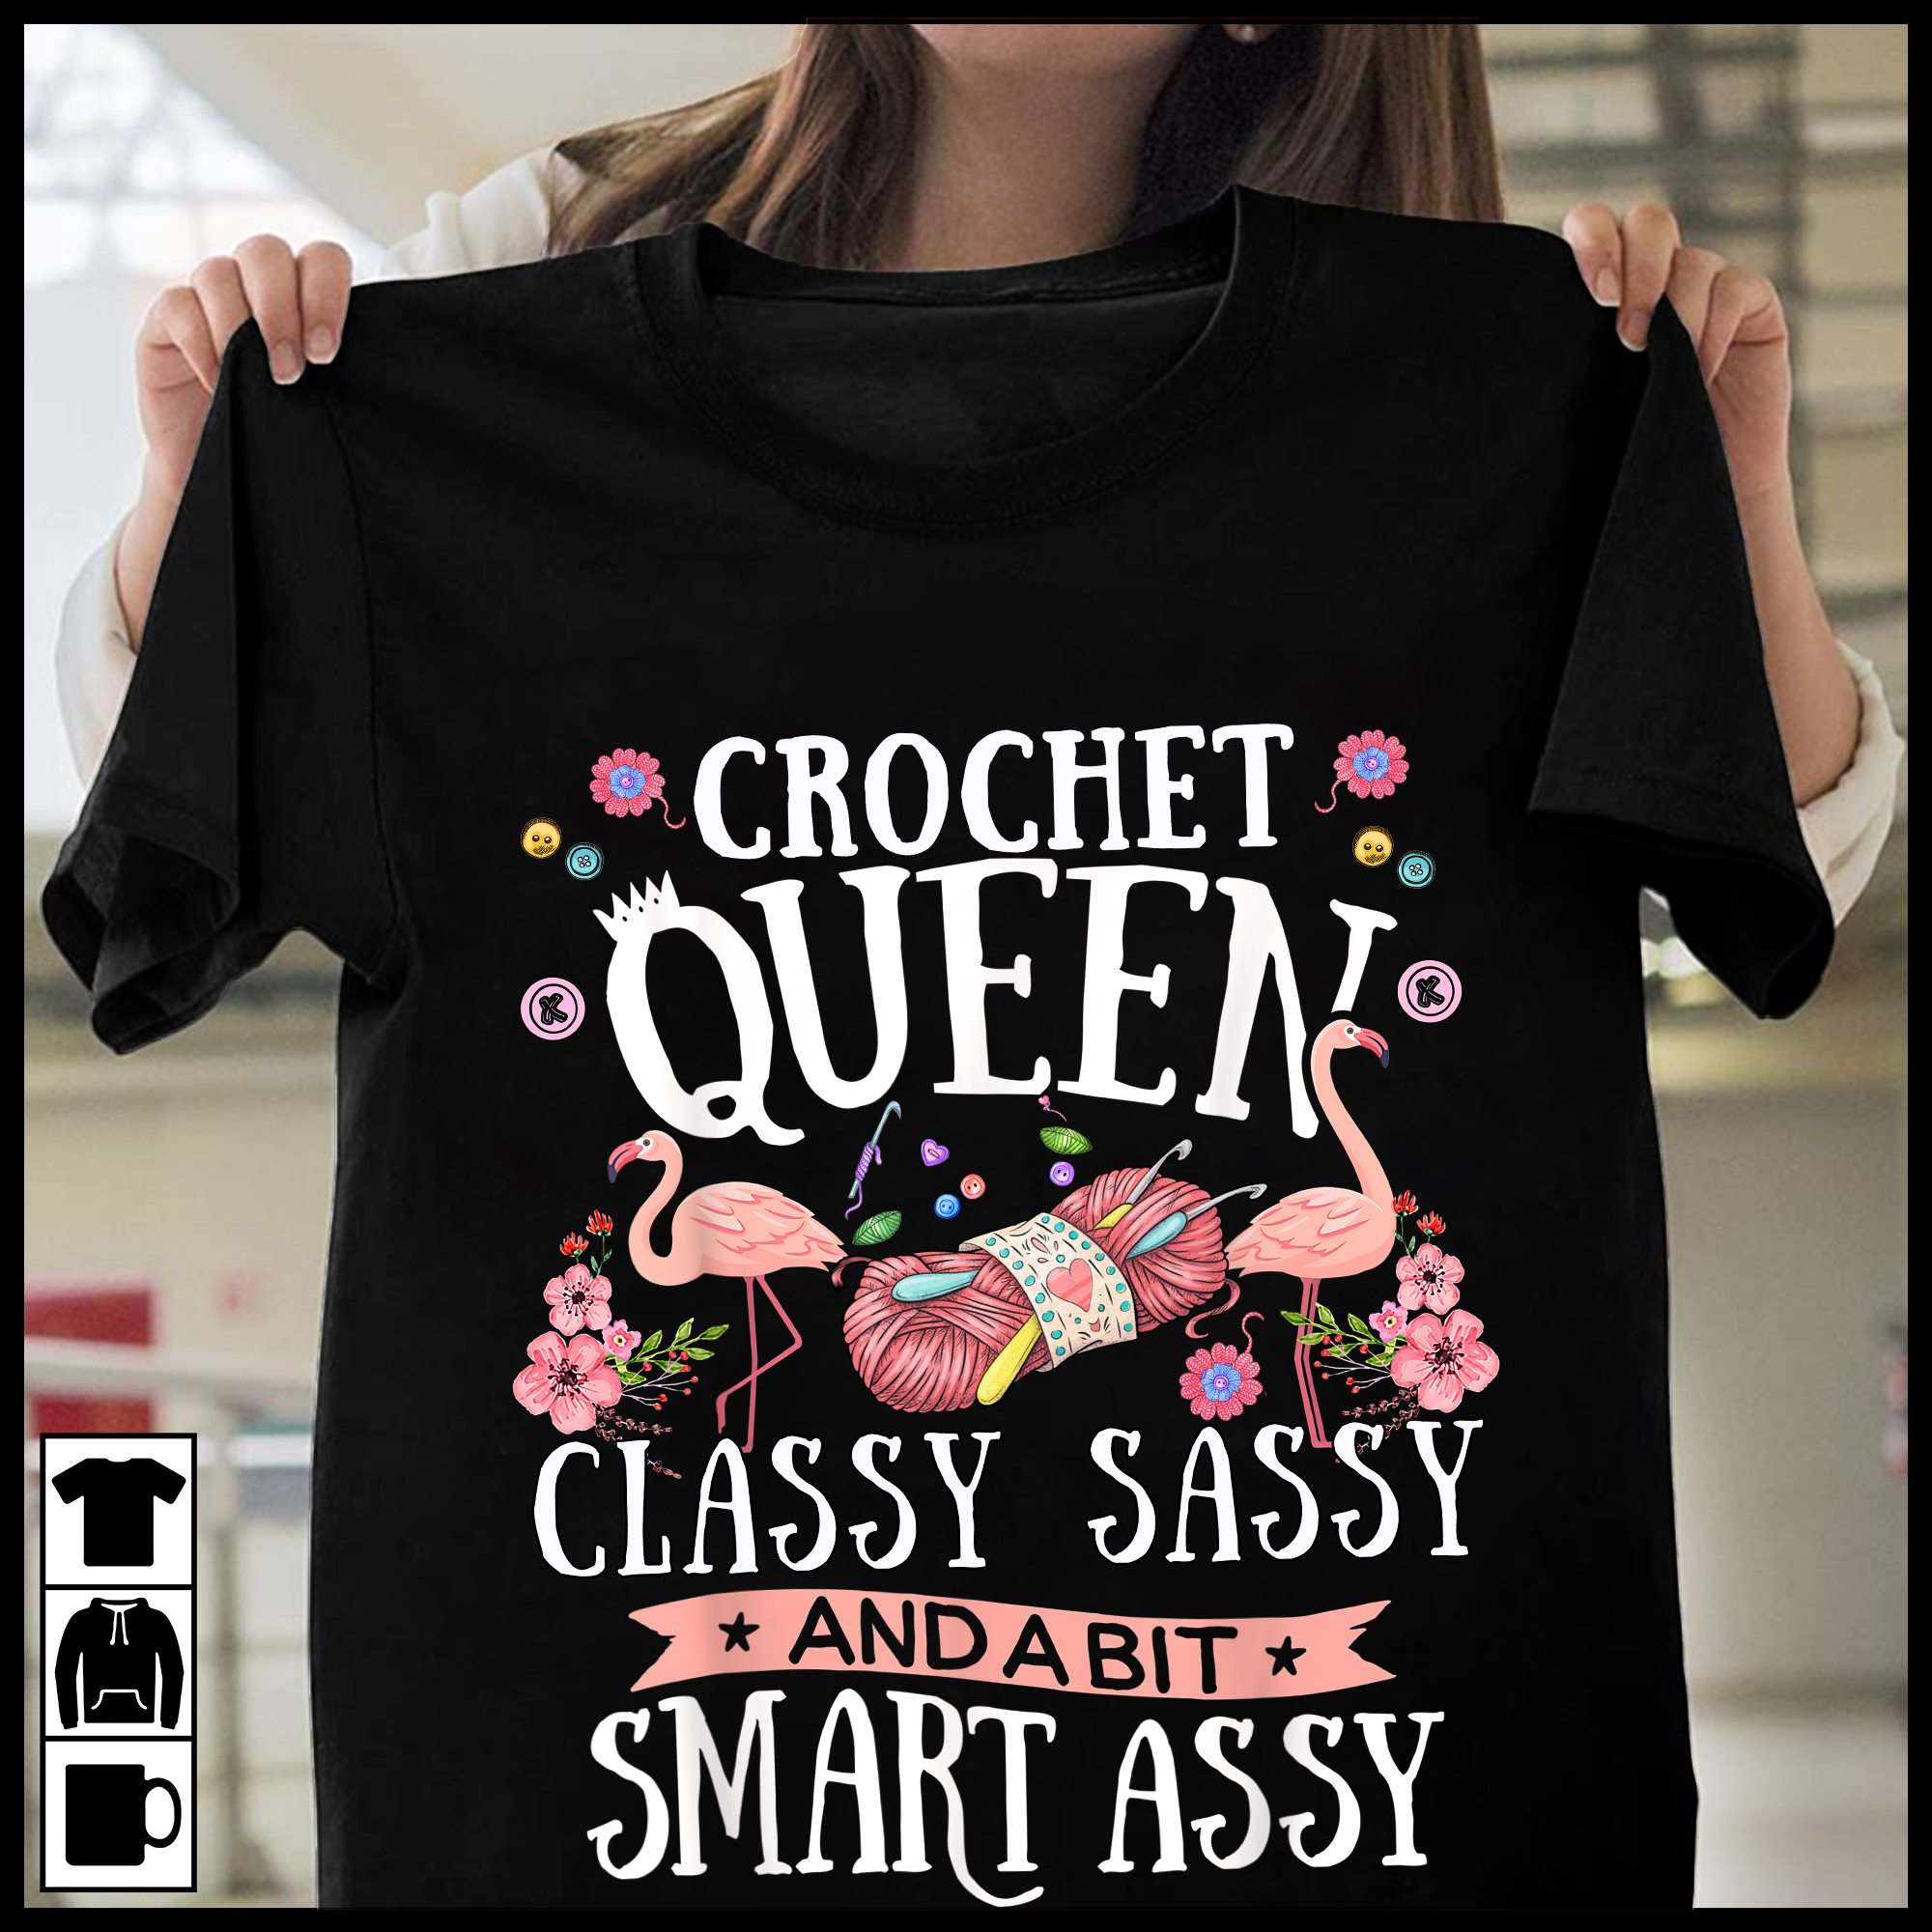 Crochet queen classy sassy and a bit smart assy - Flamingo crochet queen, crocheting lover